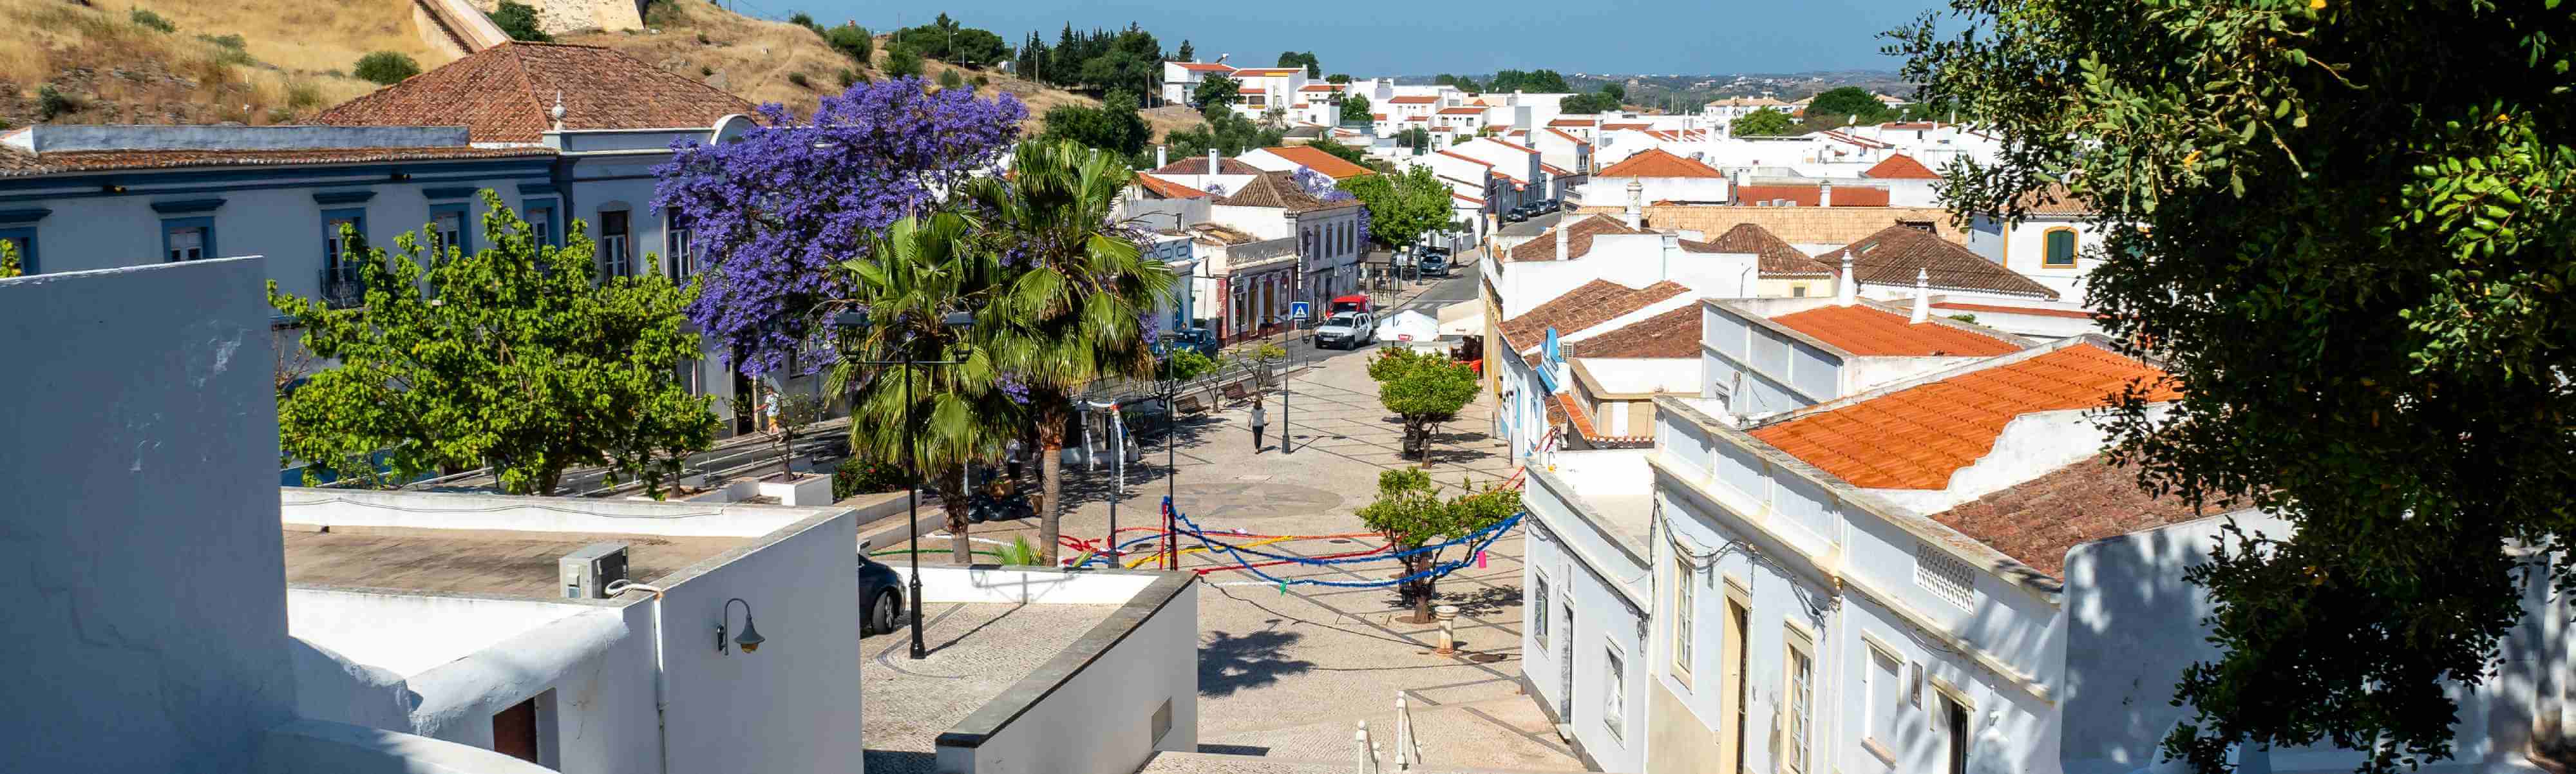 Algarve Urlaubstipp: an den Ufern des Rio Guadiana liegt Castro Marim